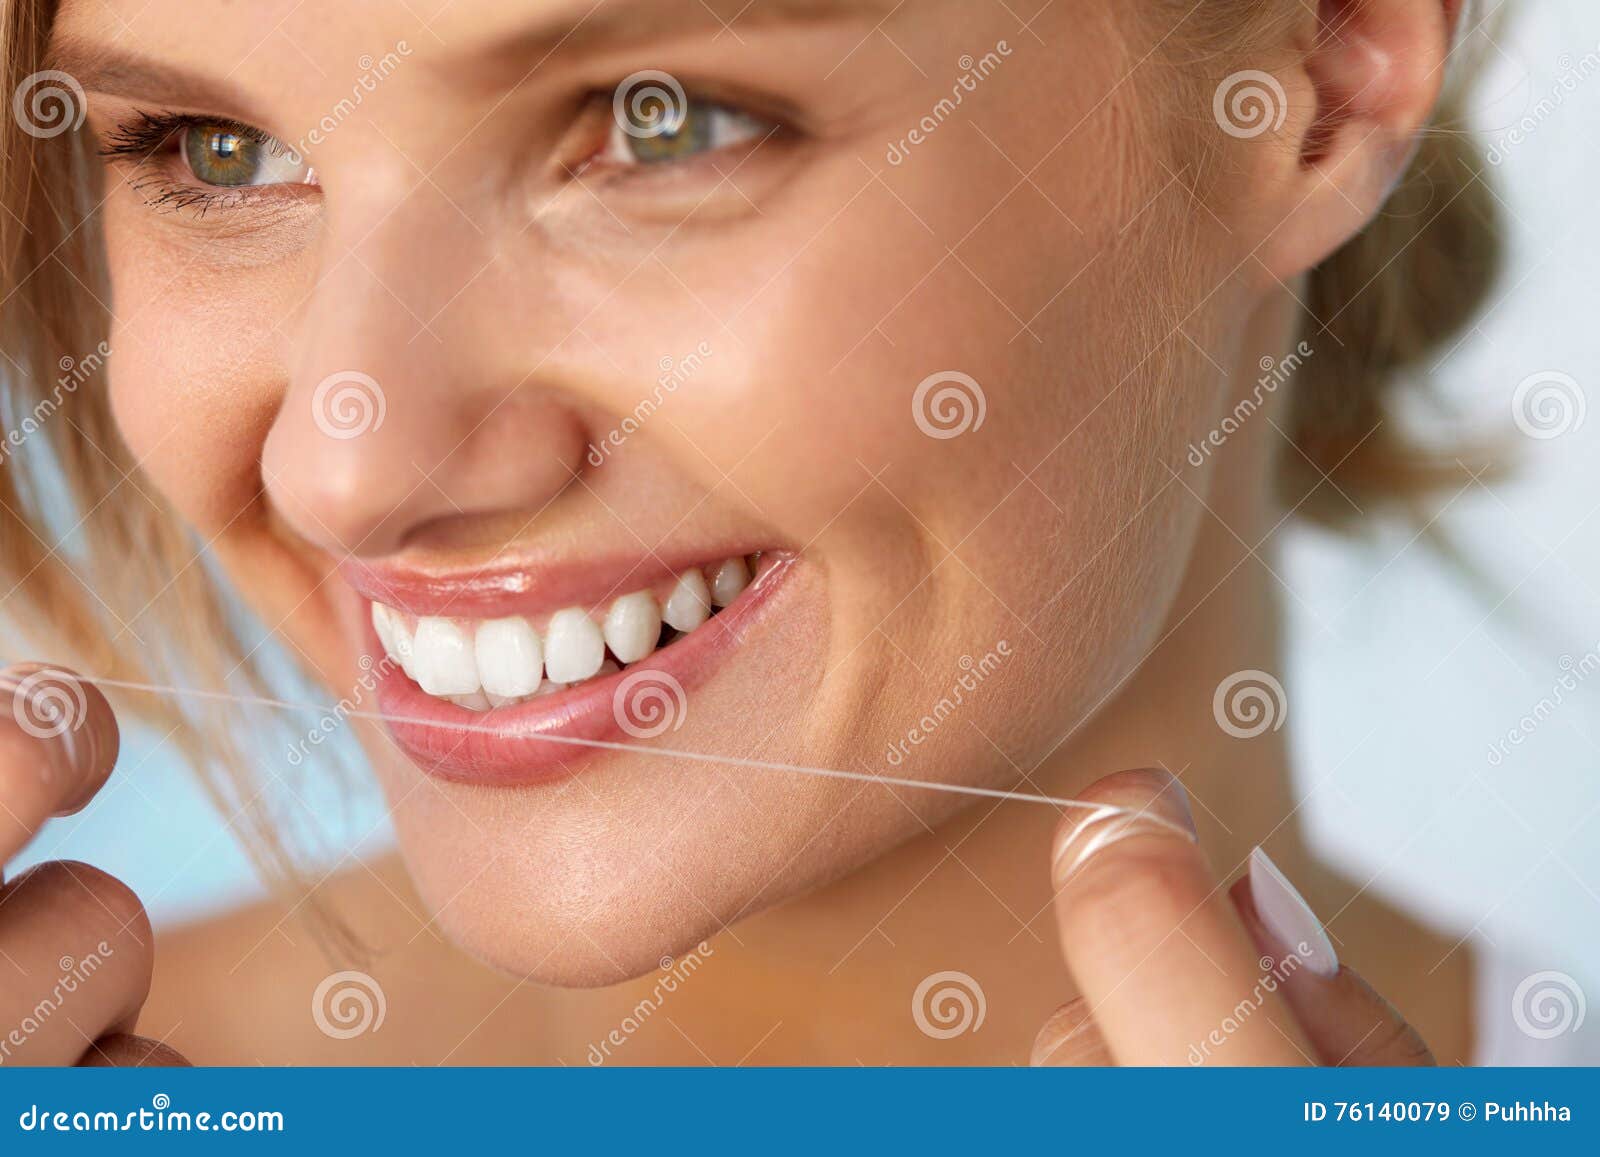 dental health. woman with beautiful smile flossing healthy teeth